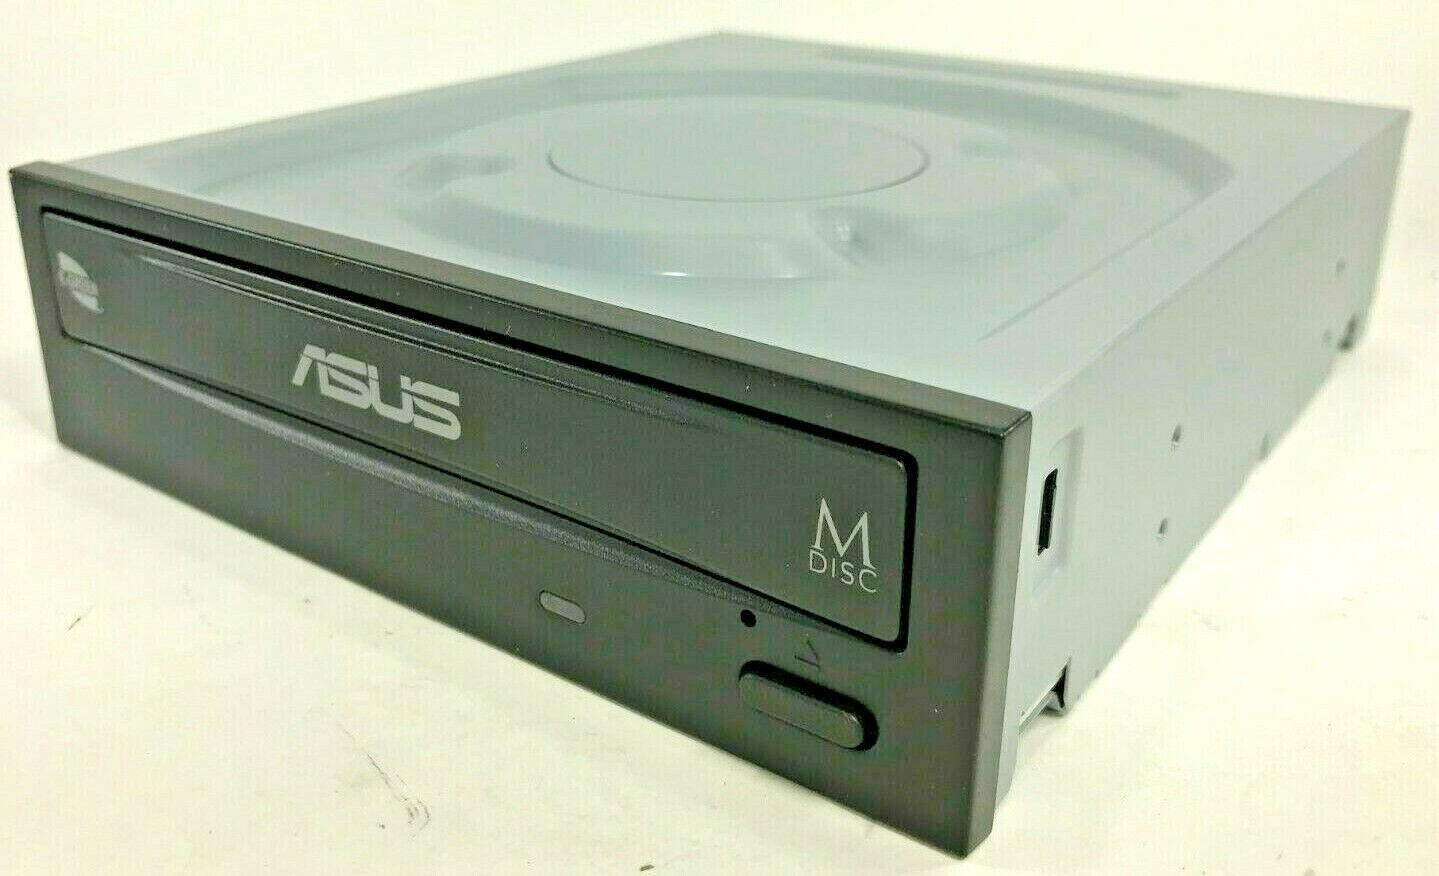 Asus - DRW-24B1ST - Internal Desktop PC DVD-RW Drive SATA Serial ATA - Black - $73.99